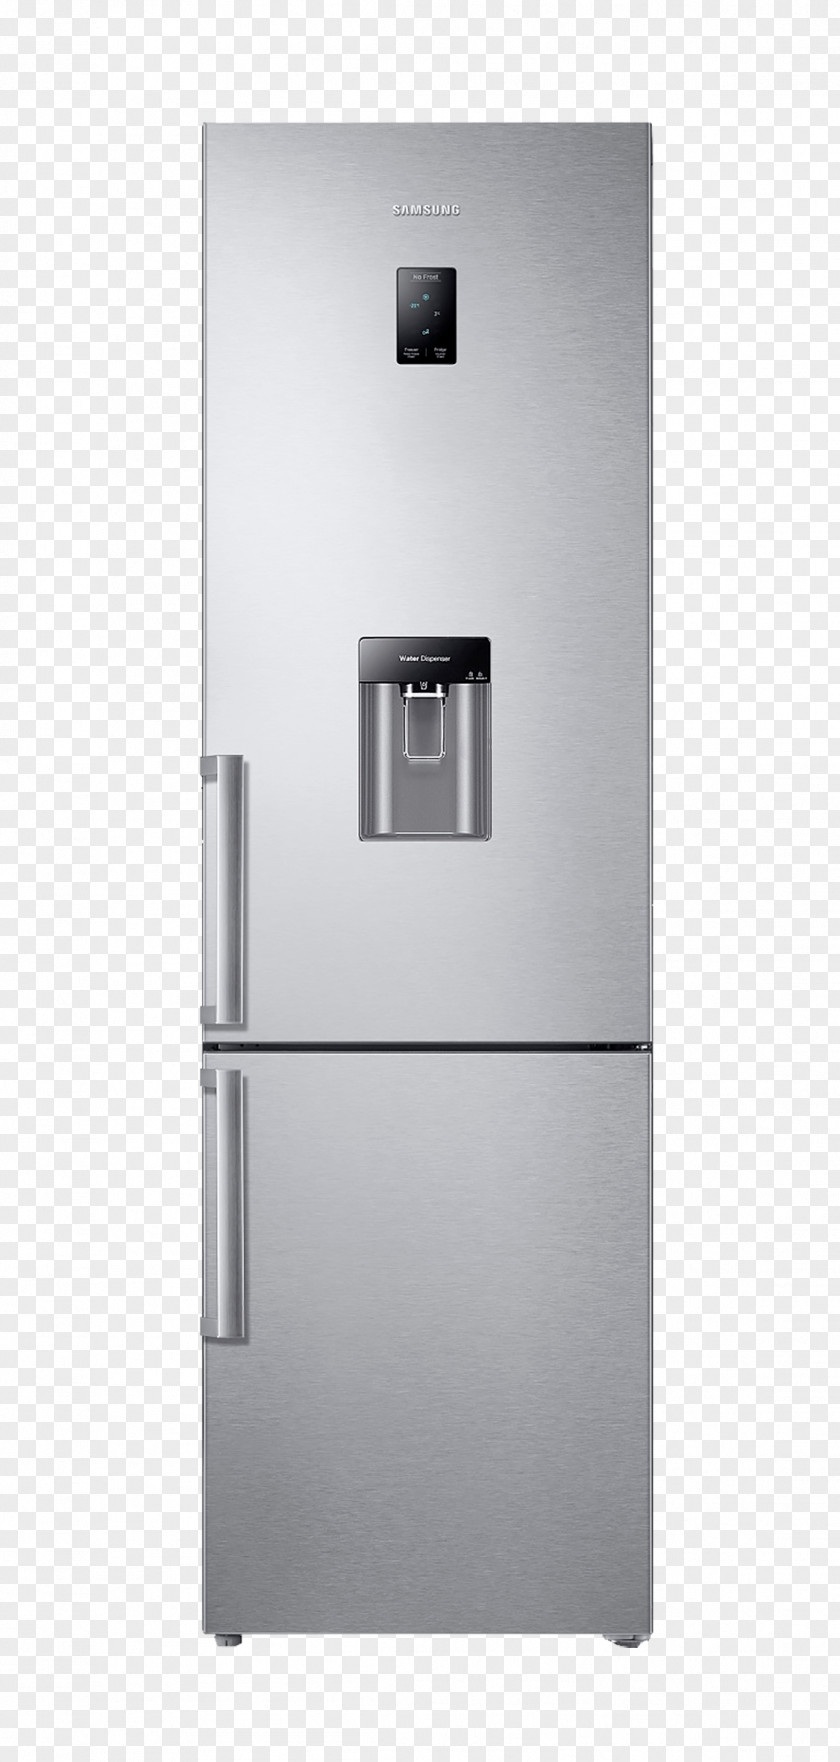 Refrigerator Samsung Galaxy S9 Freezers Auto-defrost PNG